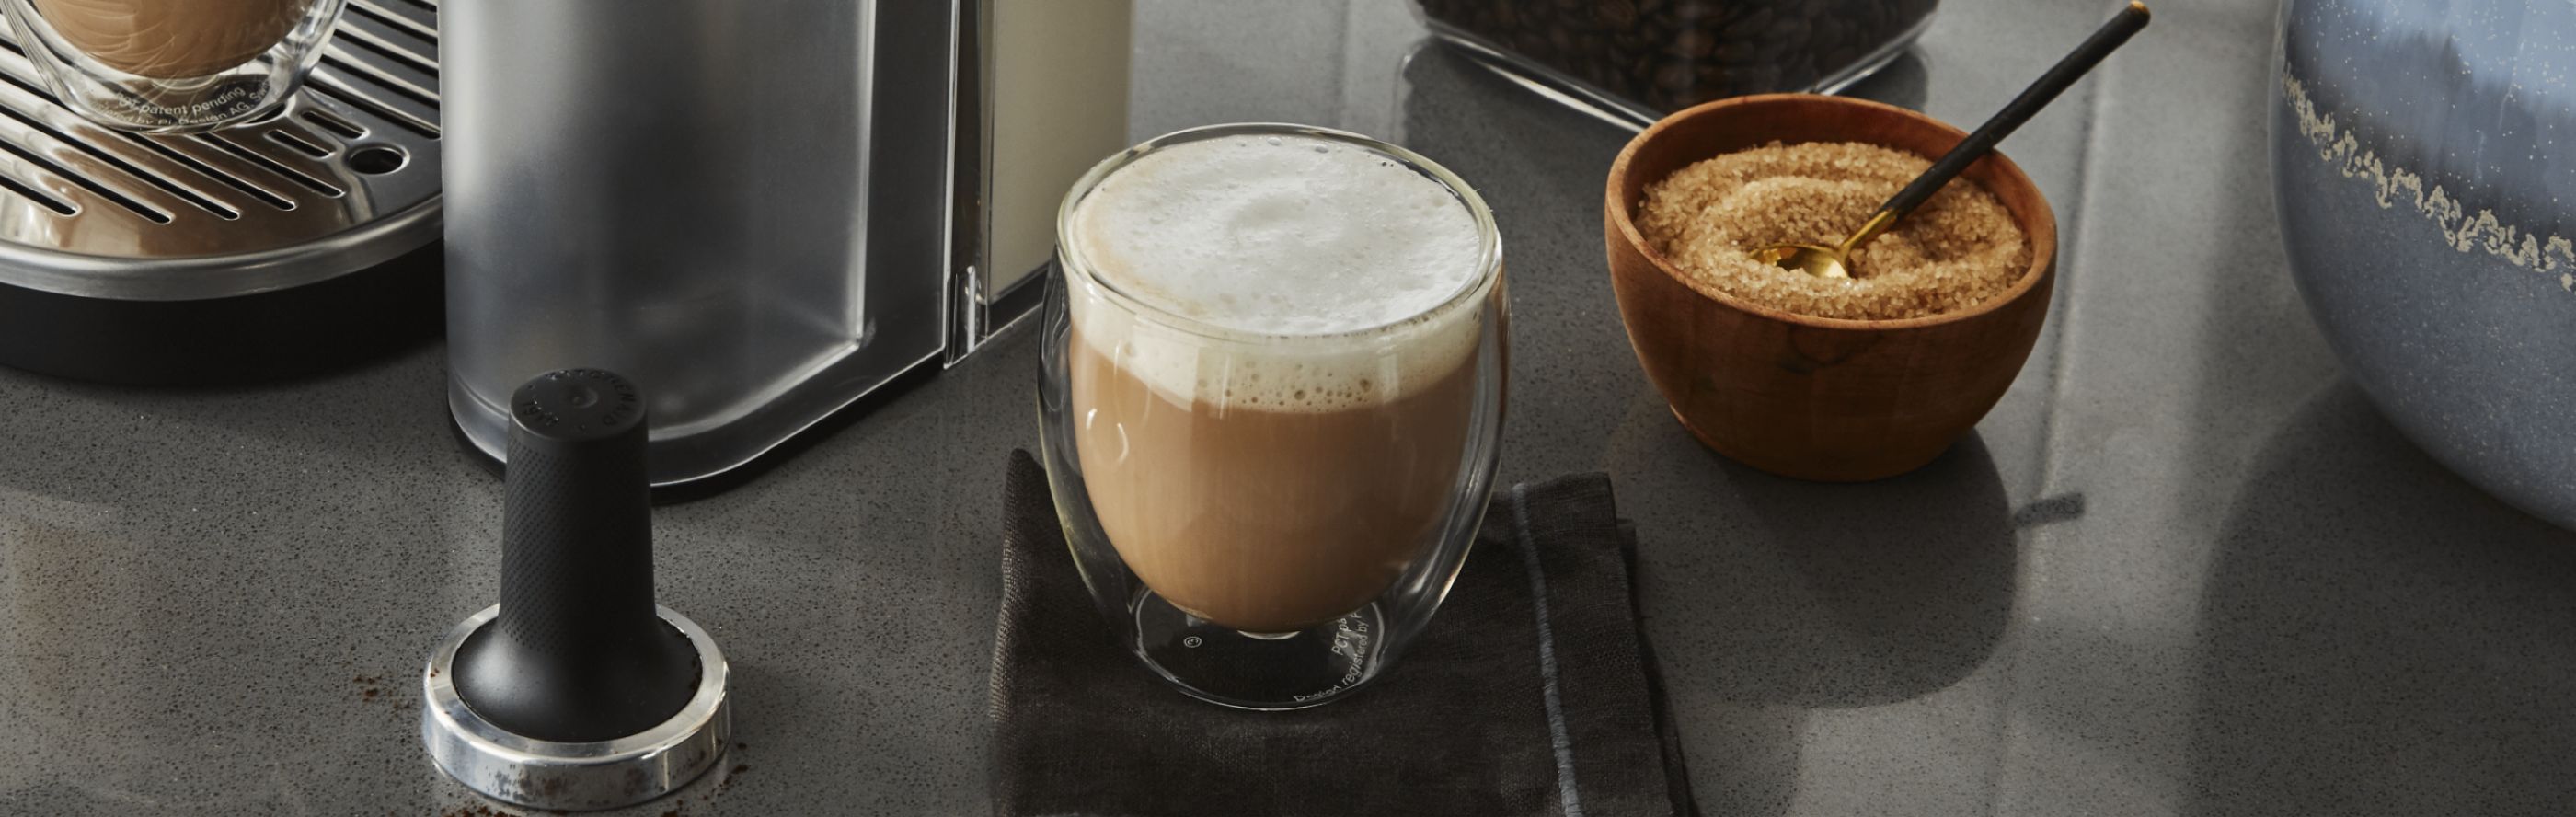 Espresso drink next to bowl of sugar